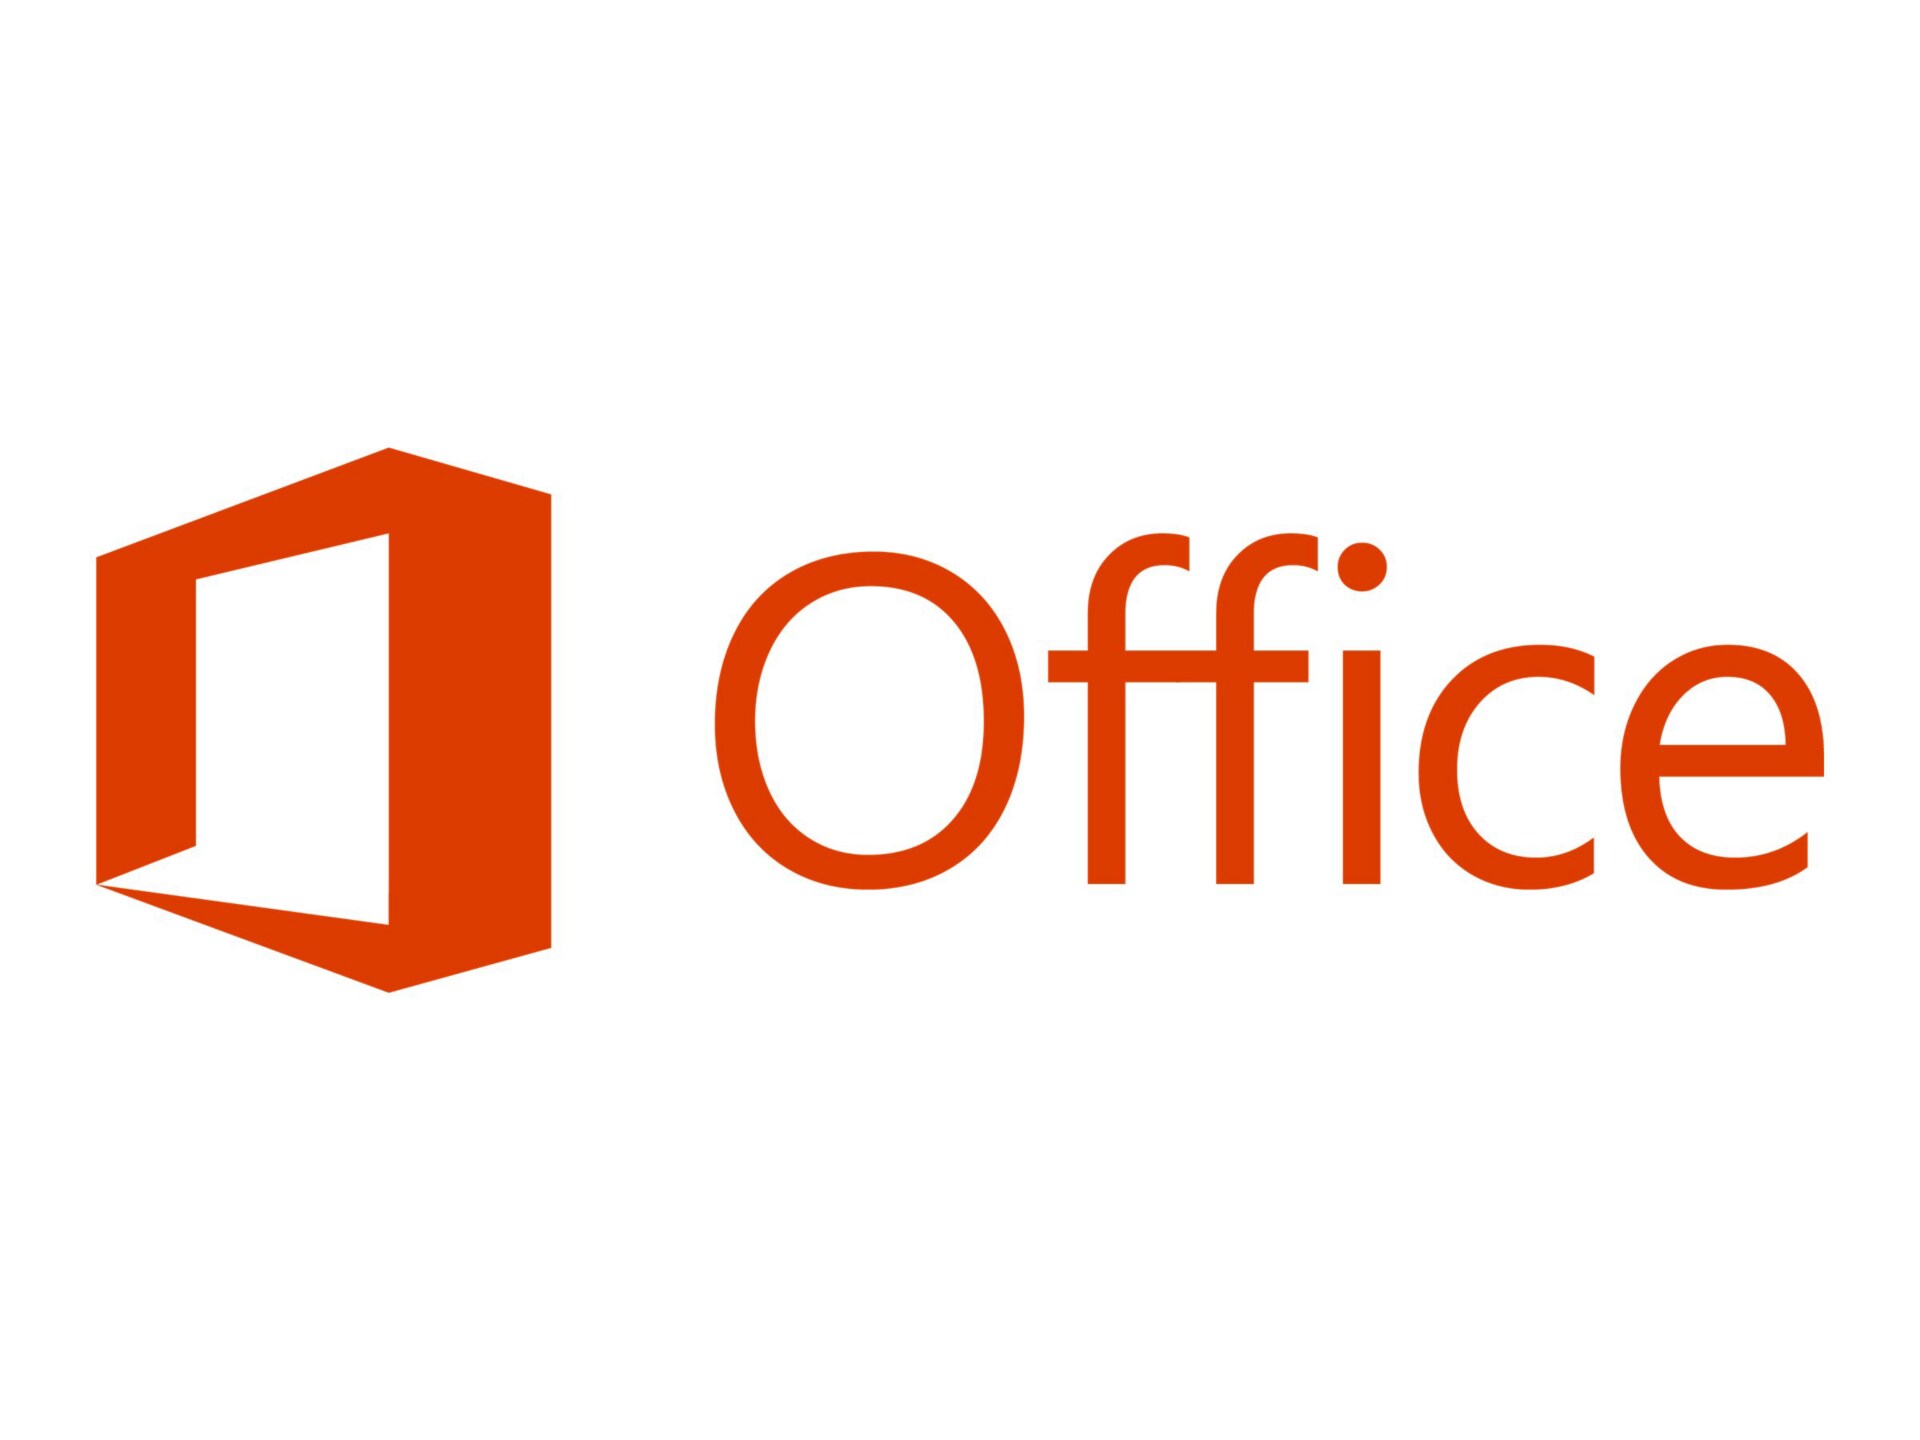 Microsoft Office Professional Plus - software assurance - 1 PC